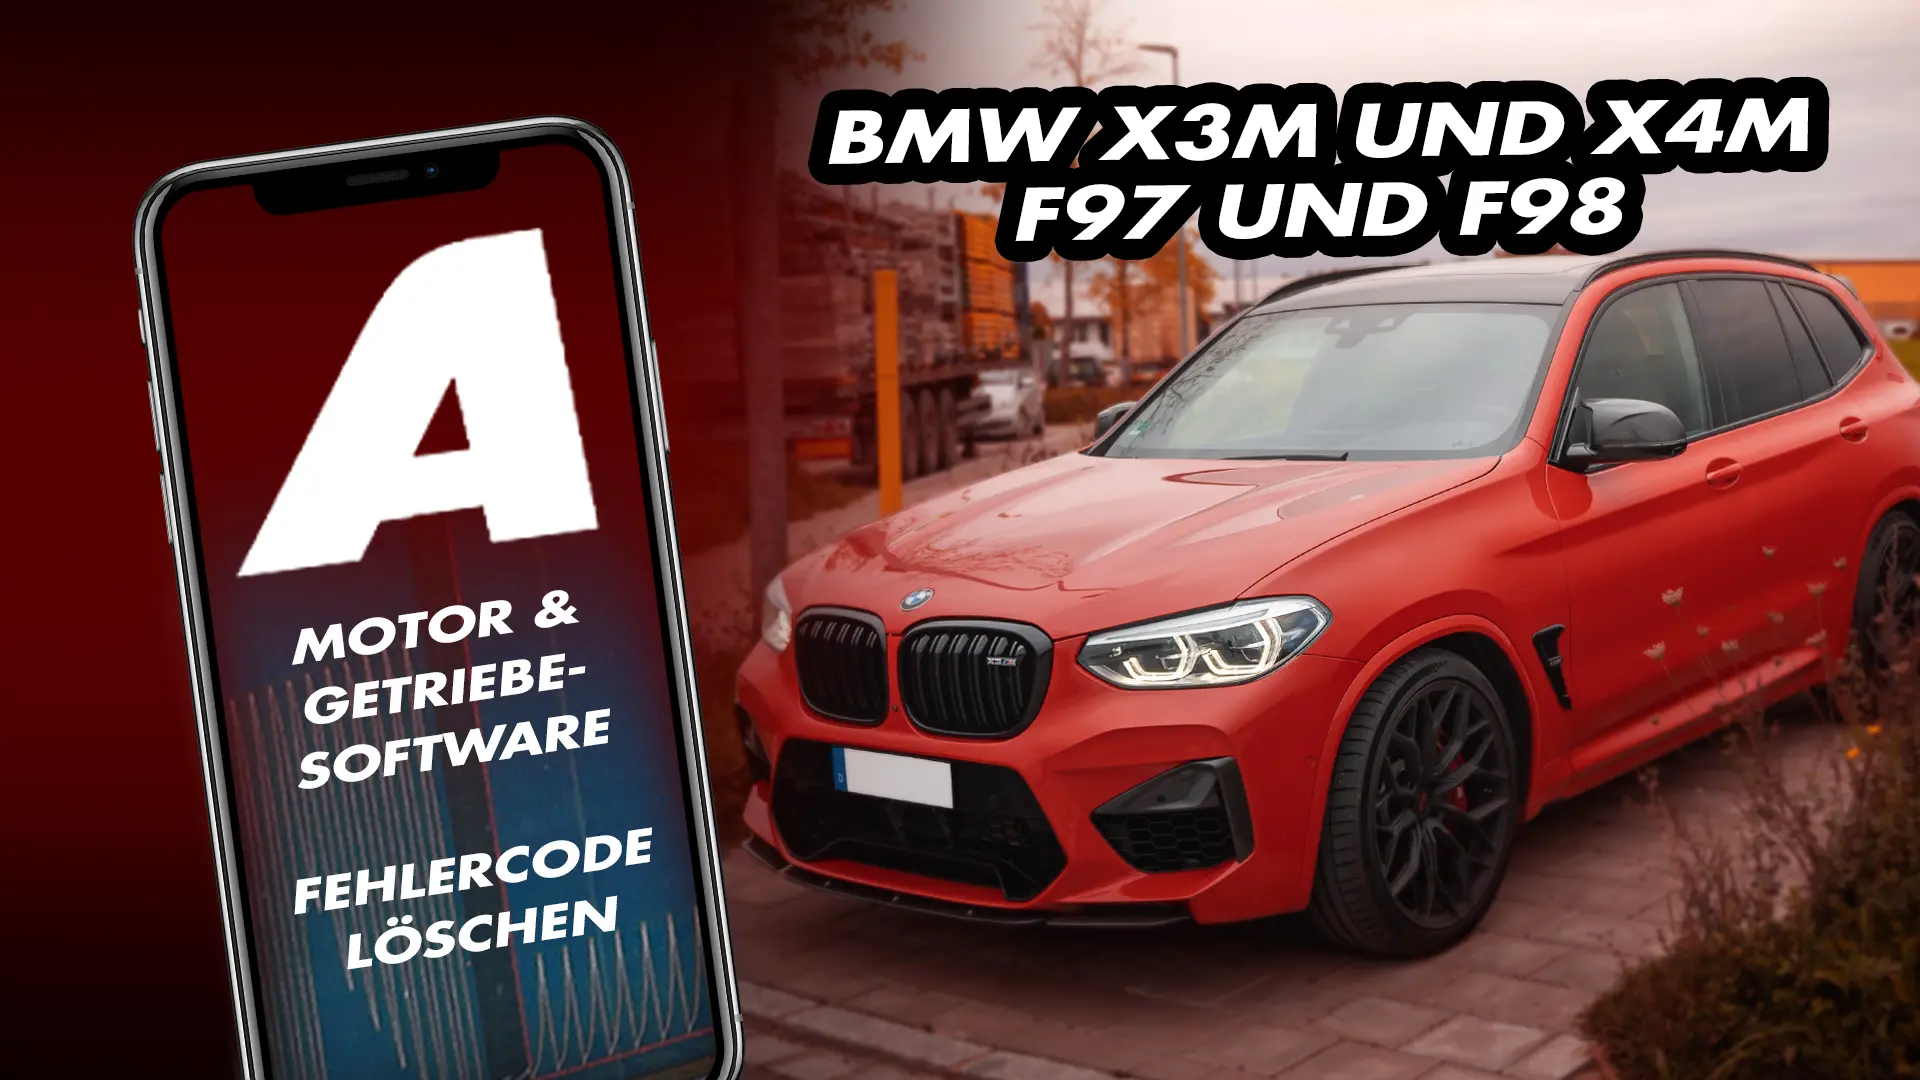 Die Aulitzky App "mach's dir selbst" | BMW M3/M4 inkl. Competition (G80/G81/G82/G83) | X3M/X4M inkl. Competition (F97/F98) S58